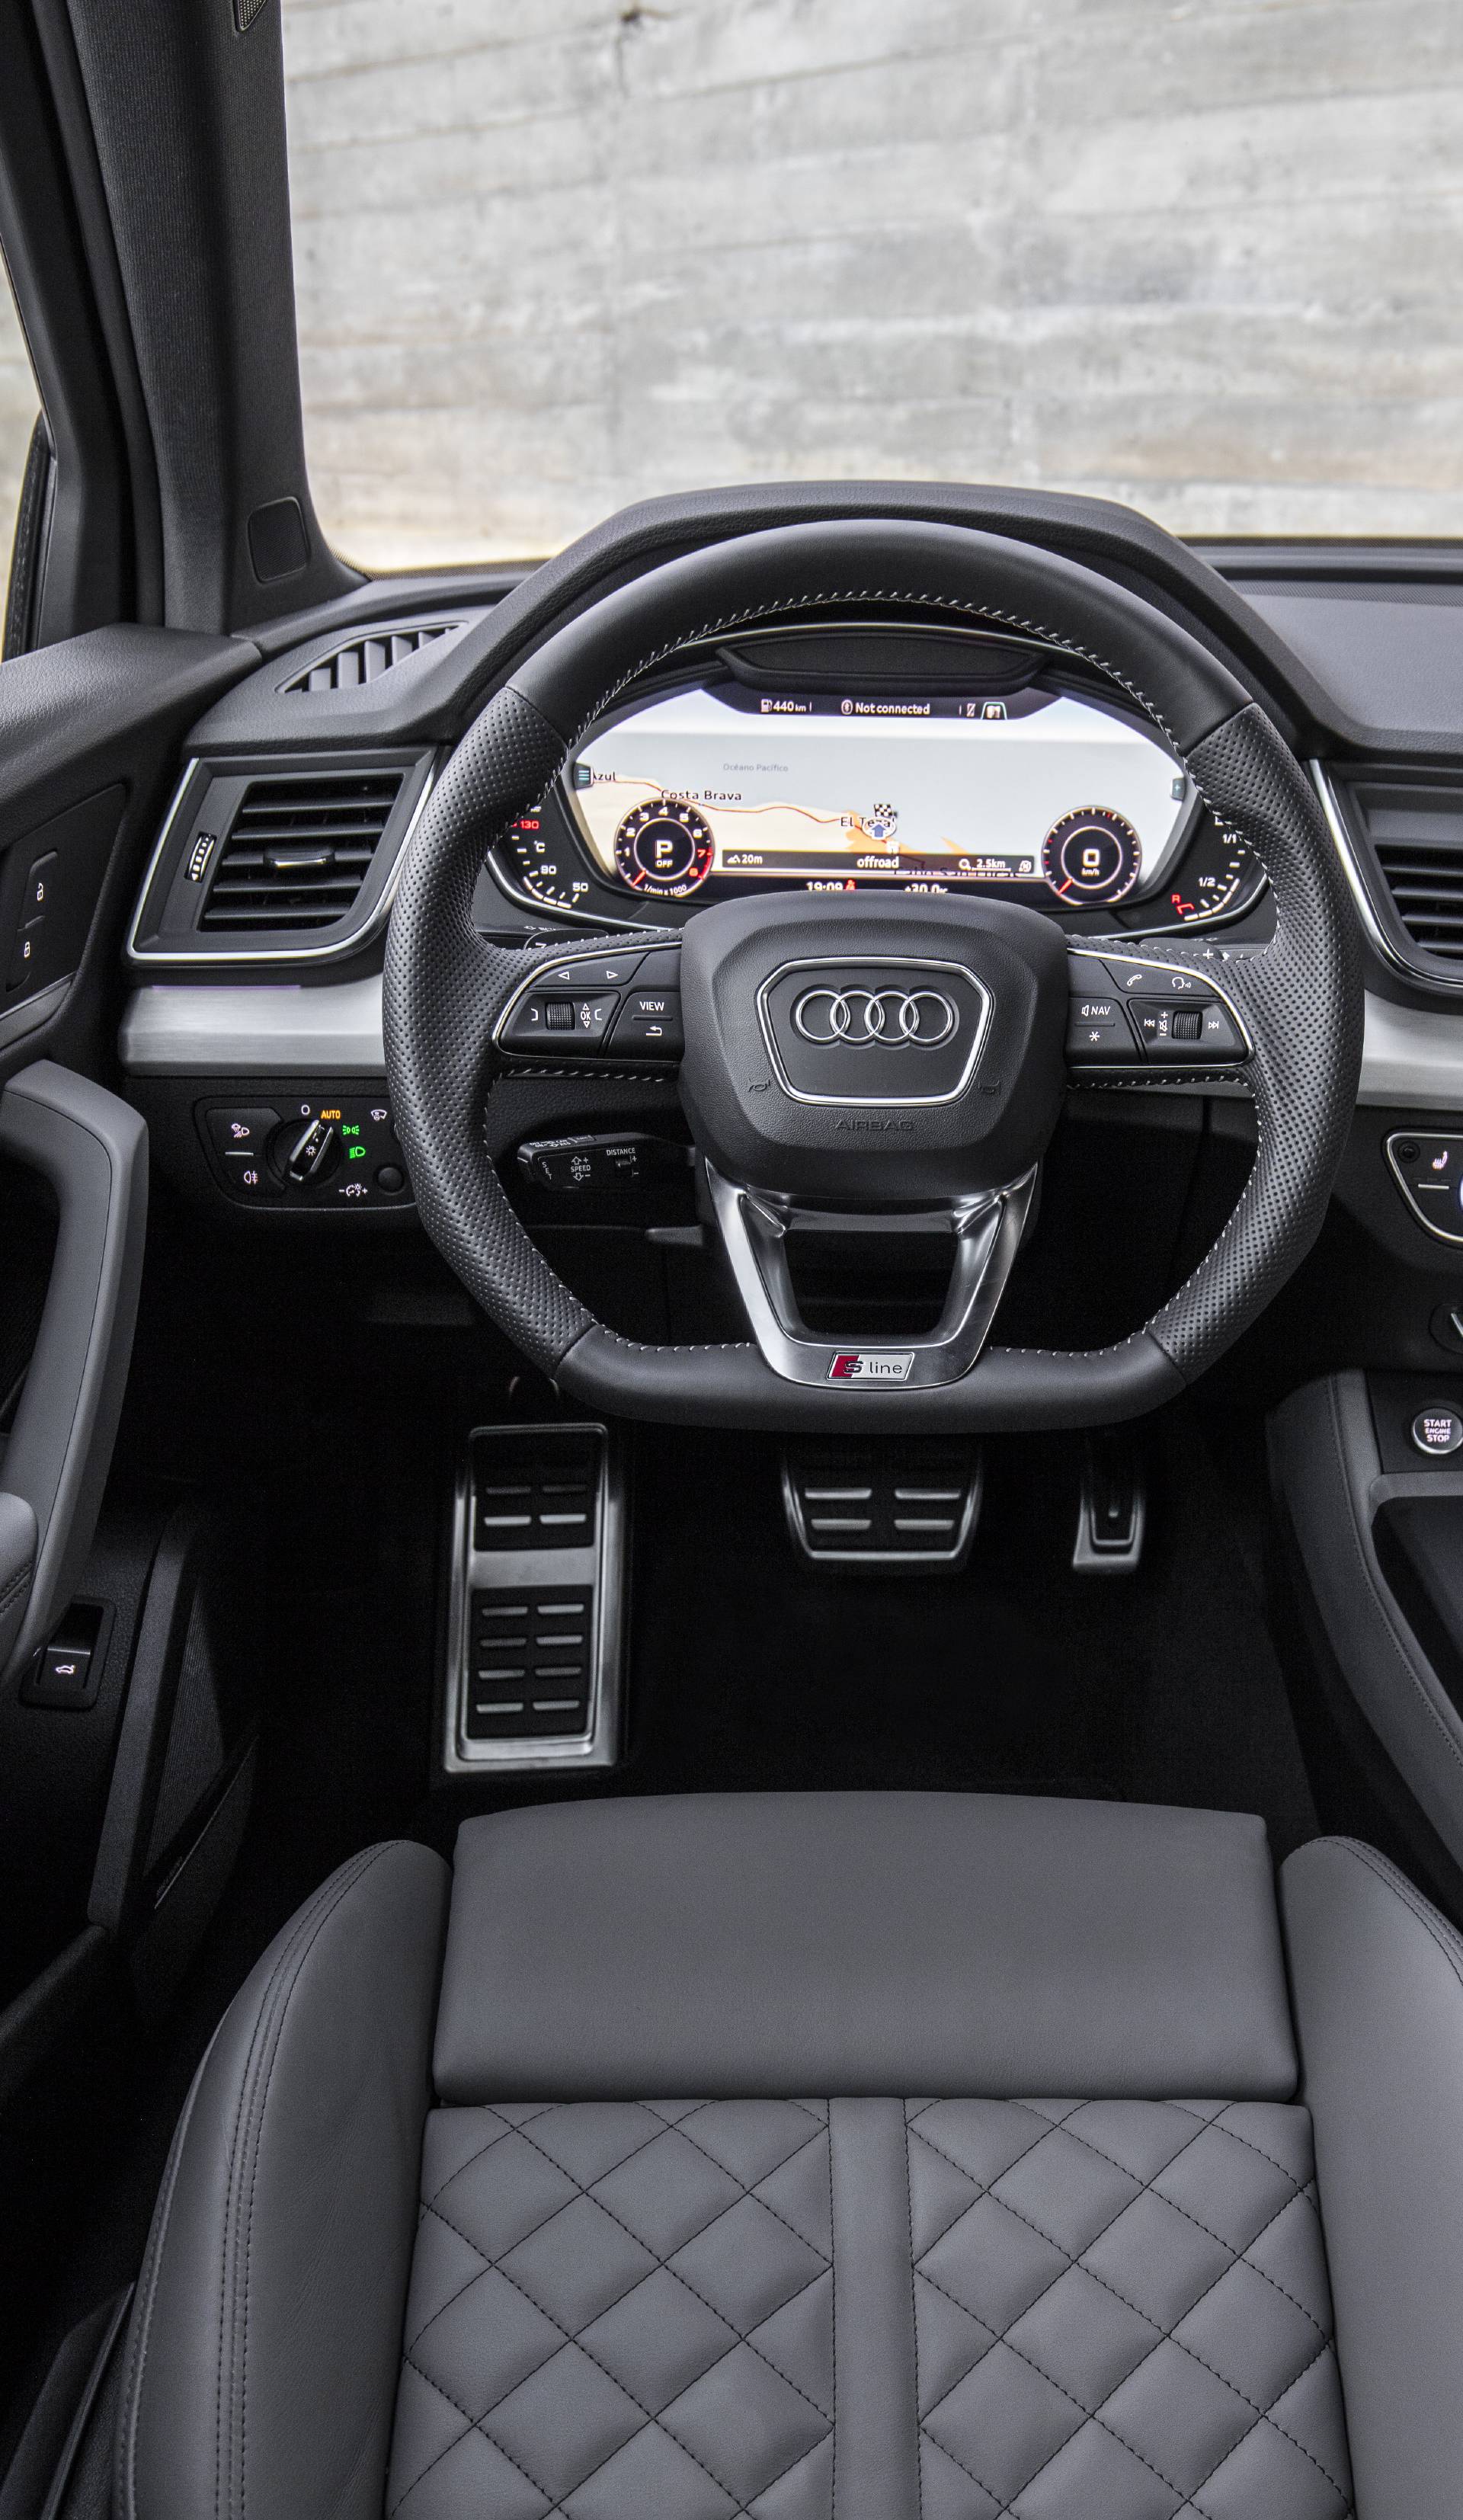 Ekskluzivno iz Meksika: Novi Audi Q5 je pustinjski ratnik